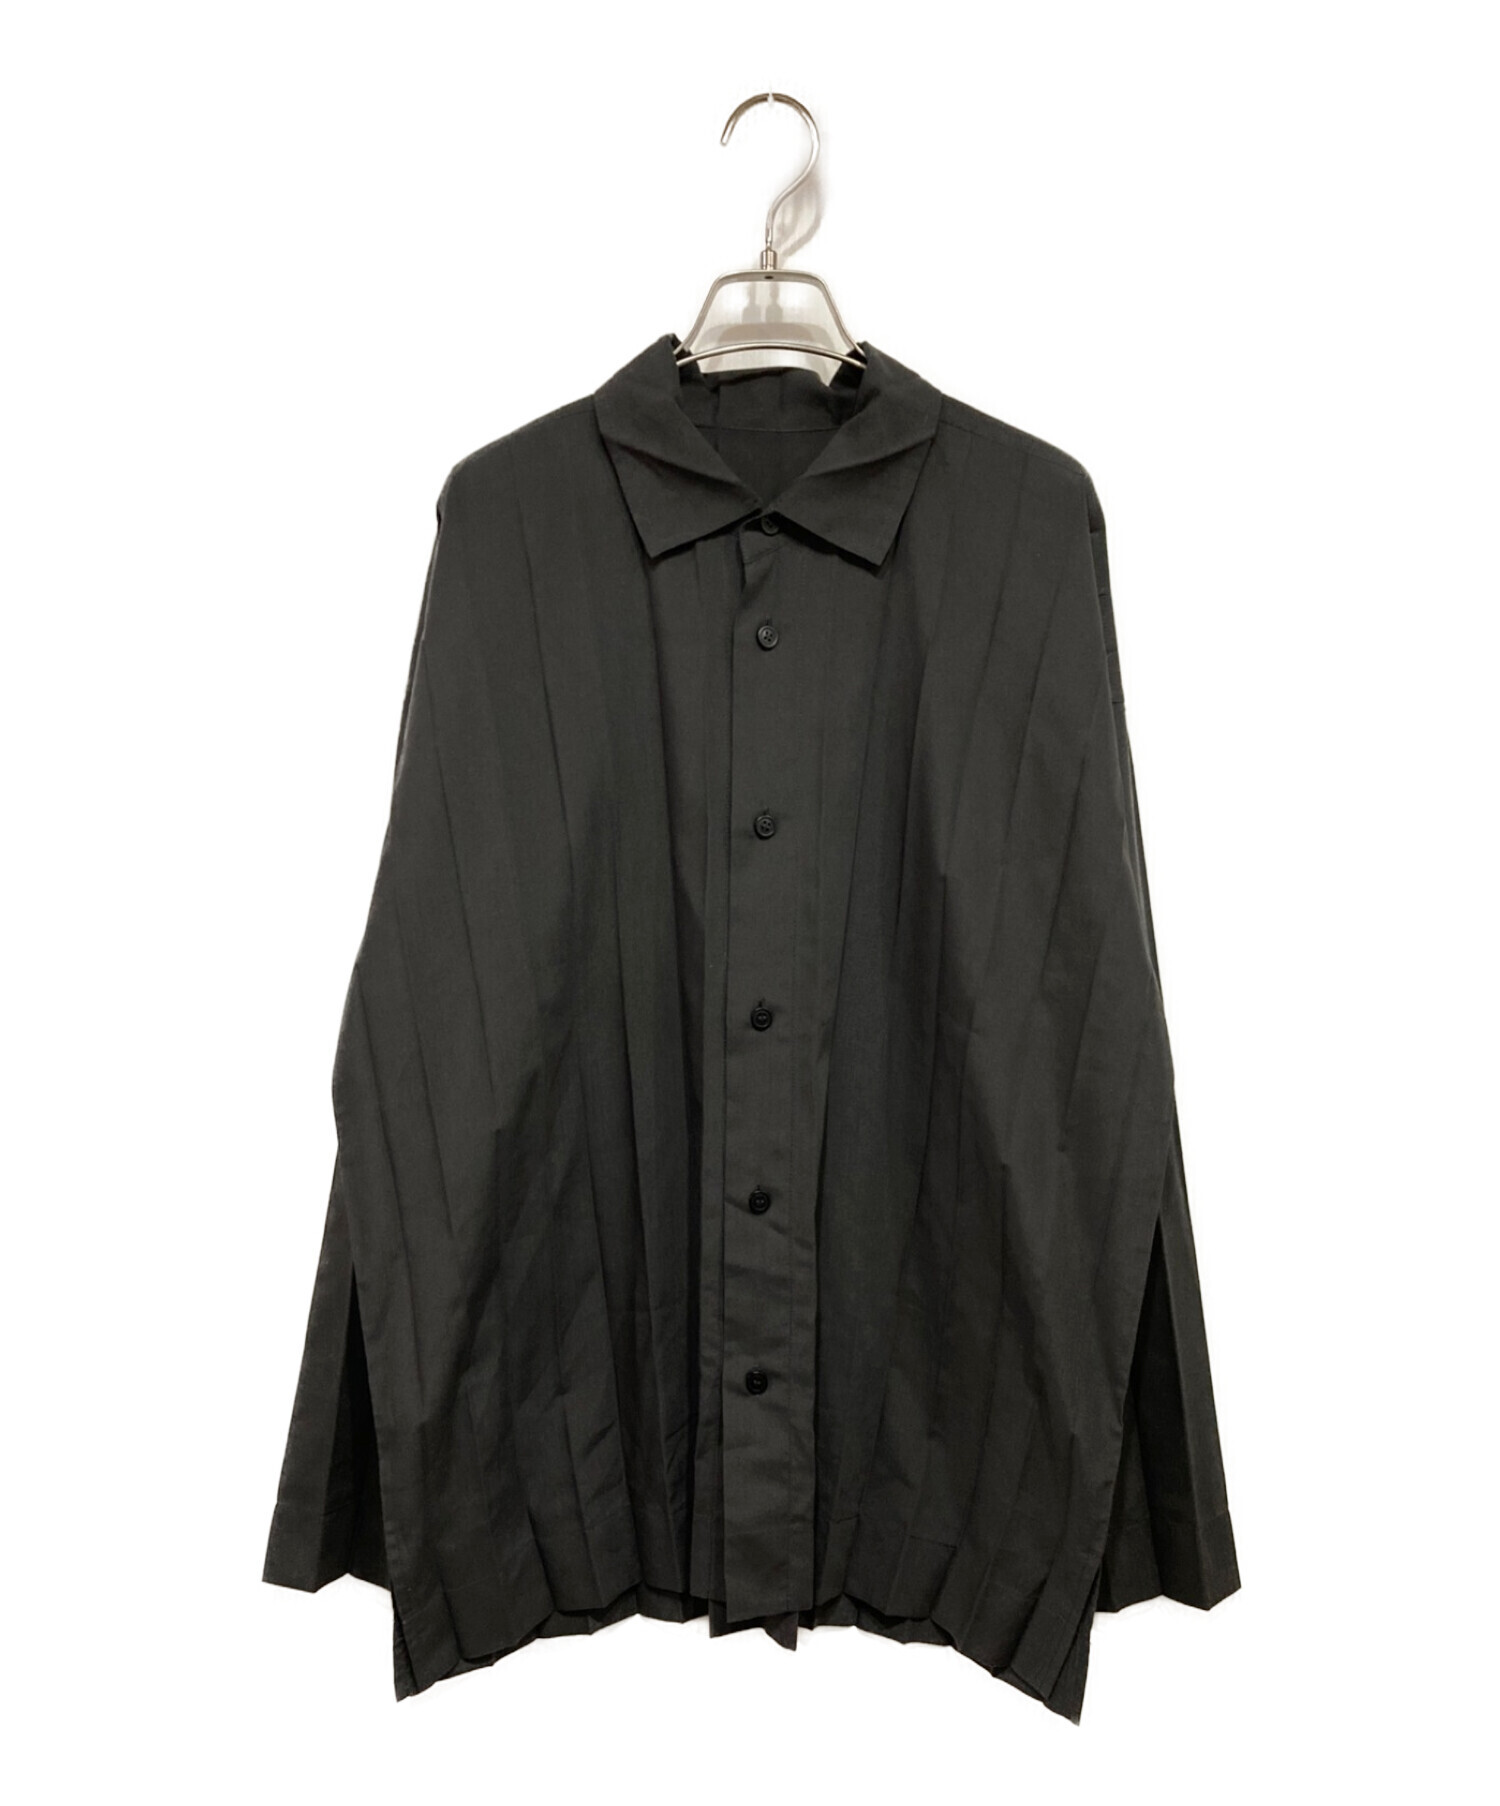 HOMME PLISSE ISSEY MIYAKE (オムプリッセ イッセイ ミヤケ) EDGE SHIRT プリーツシャツ ブラック サイズ:3